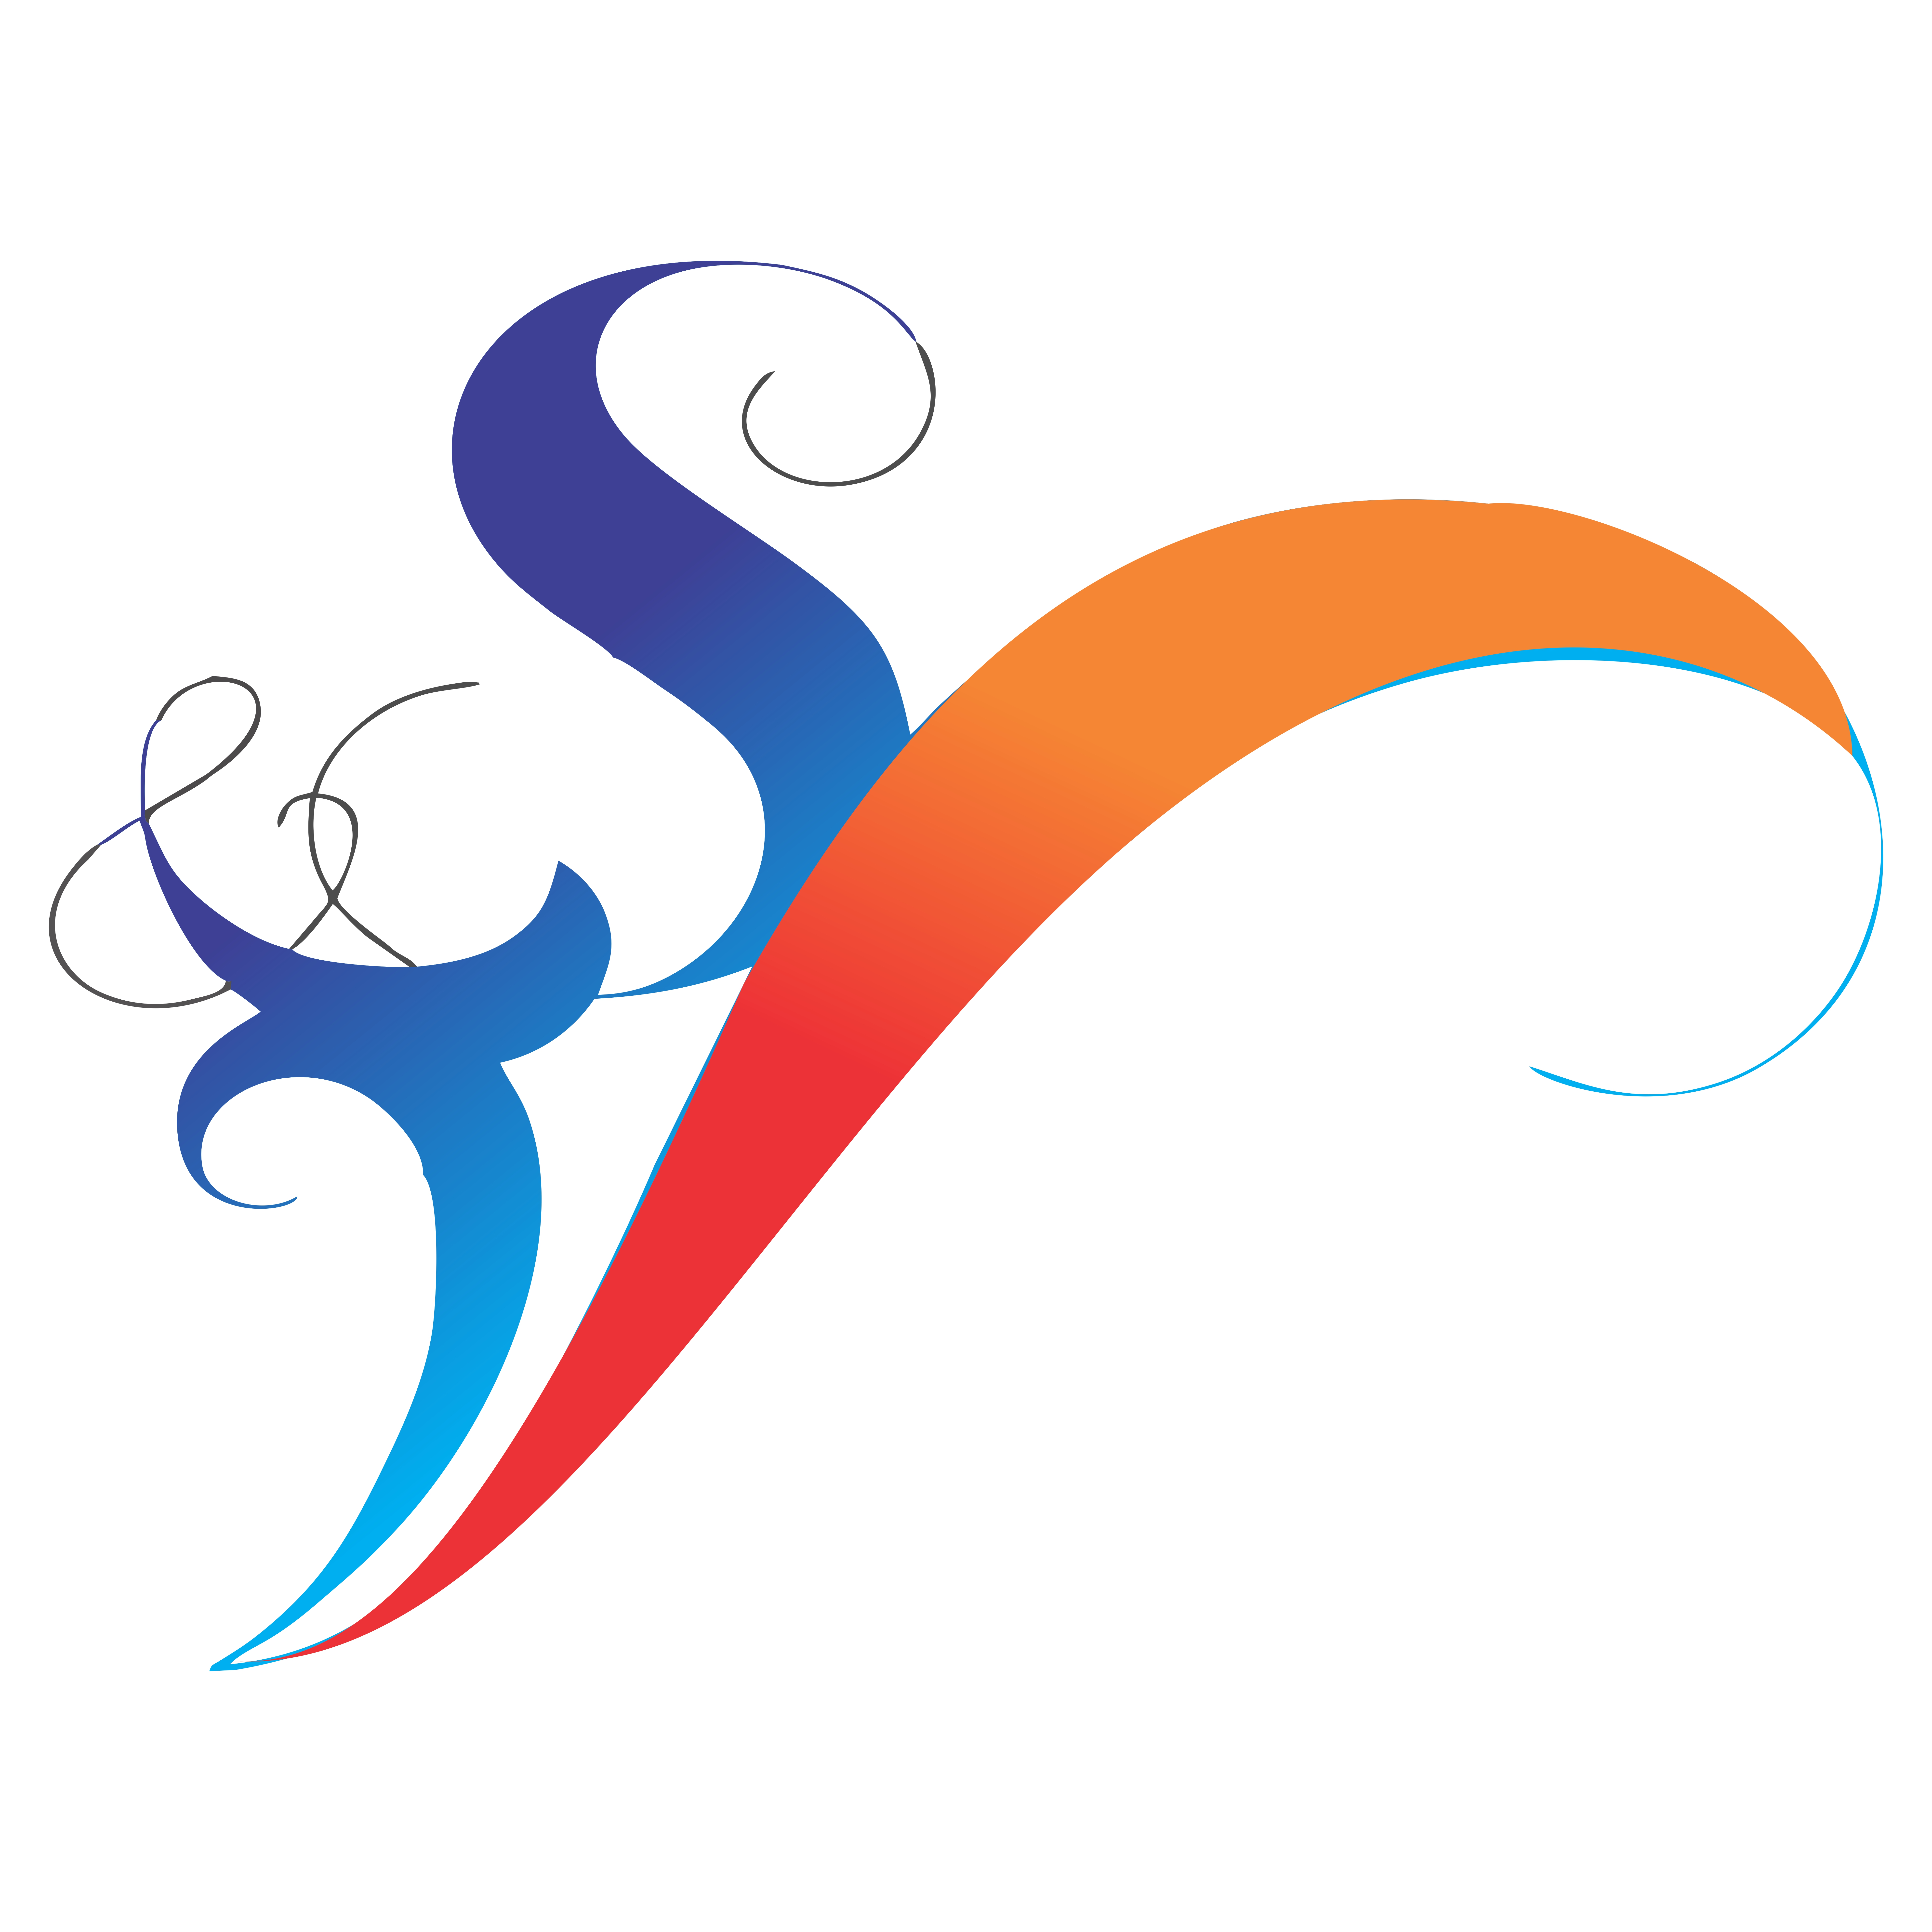 Business logo of Sv Enterprises based out of Thane